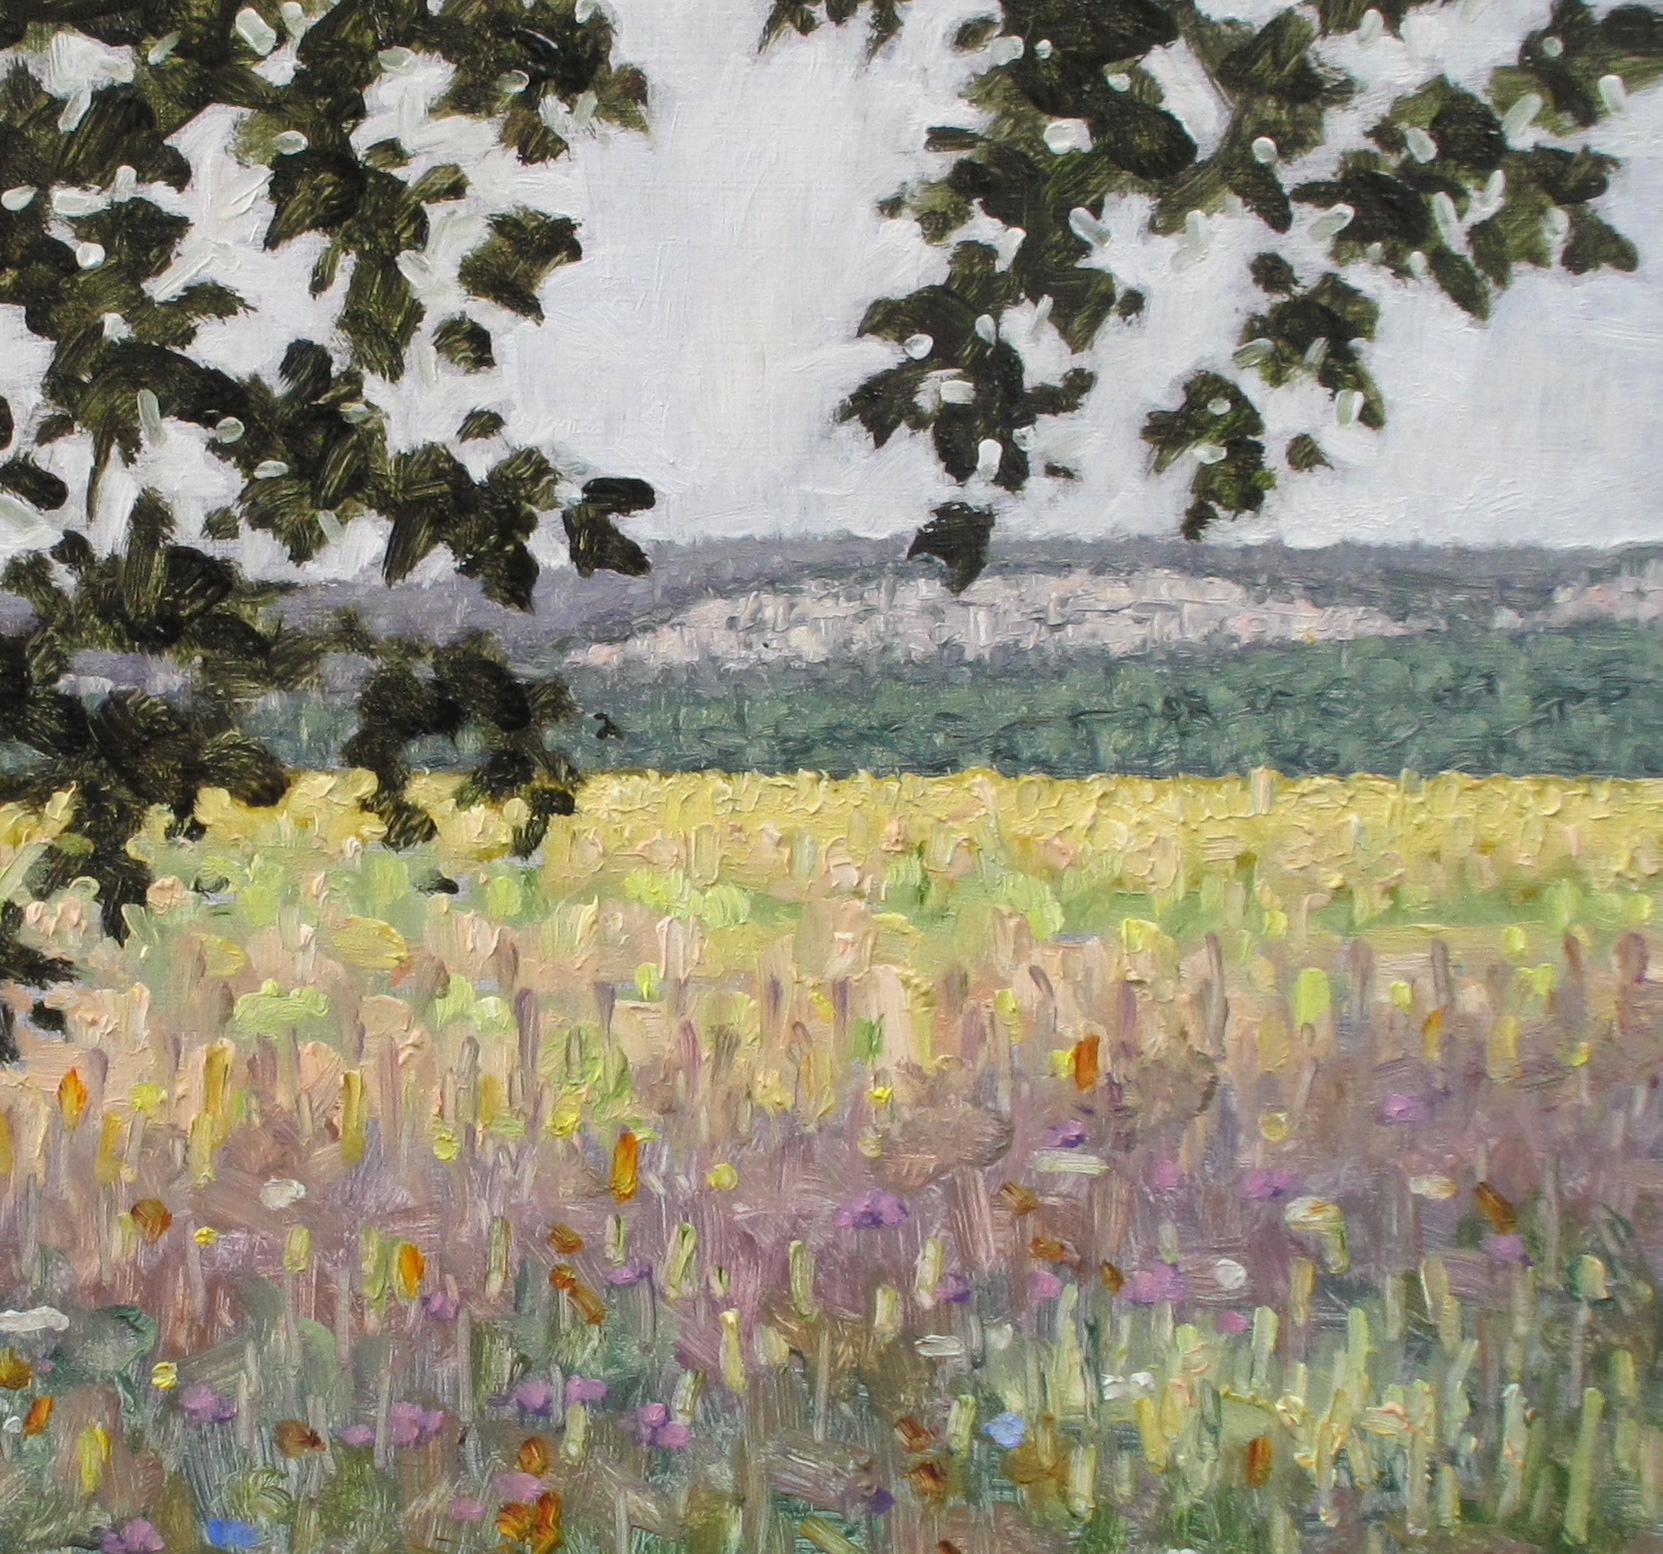 Field Painting August 3 2020, Green Tree, Violet Blue, Lavender, White Flowers - Purple Landscape Painting by Thomas Sarrantonio